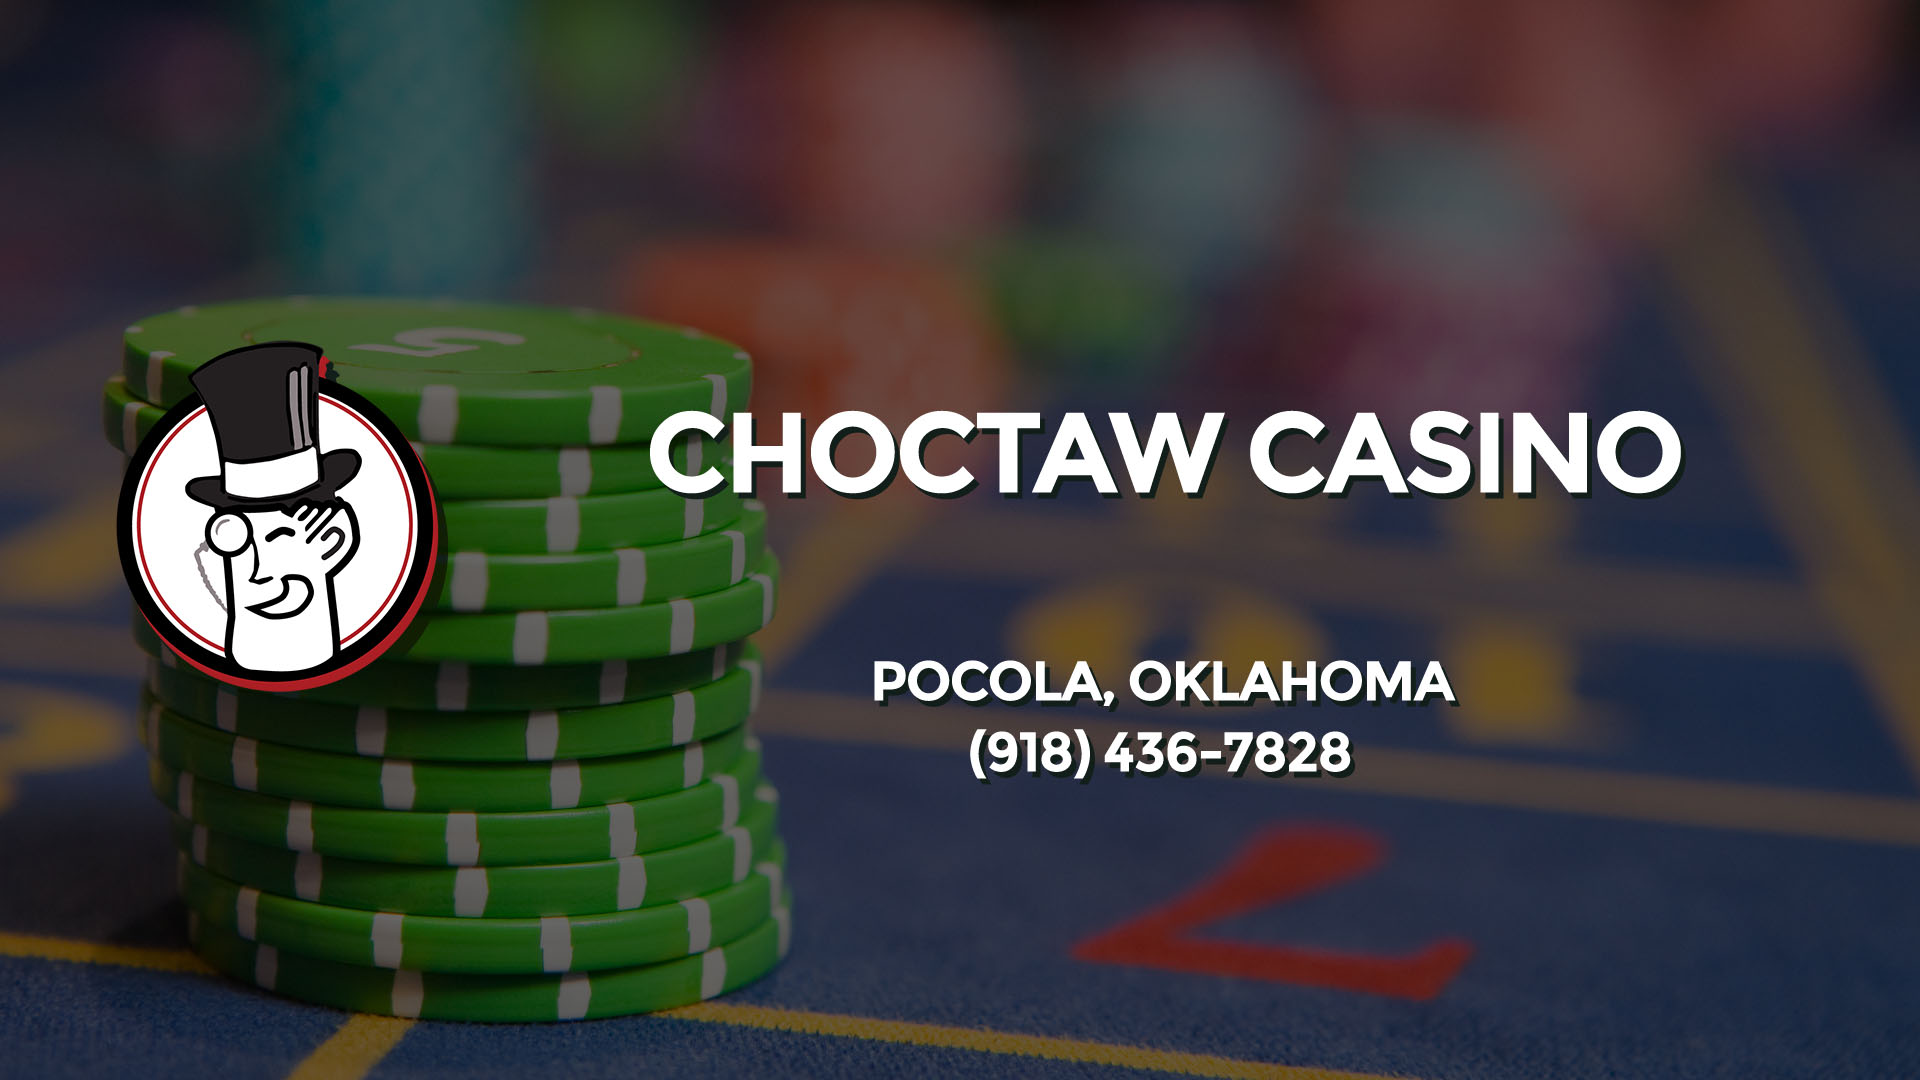 choctaw casino pocola ok phone number